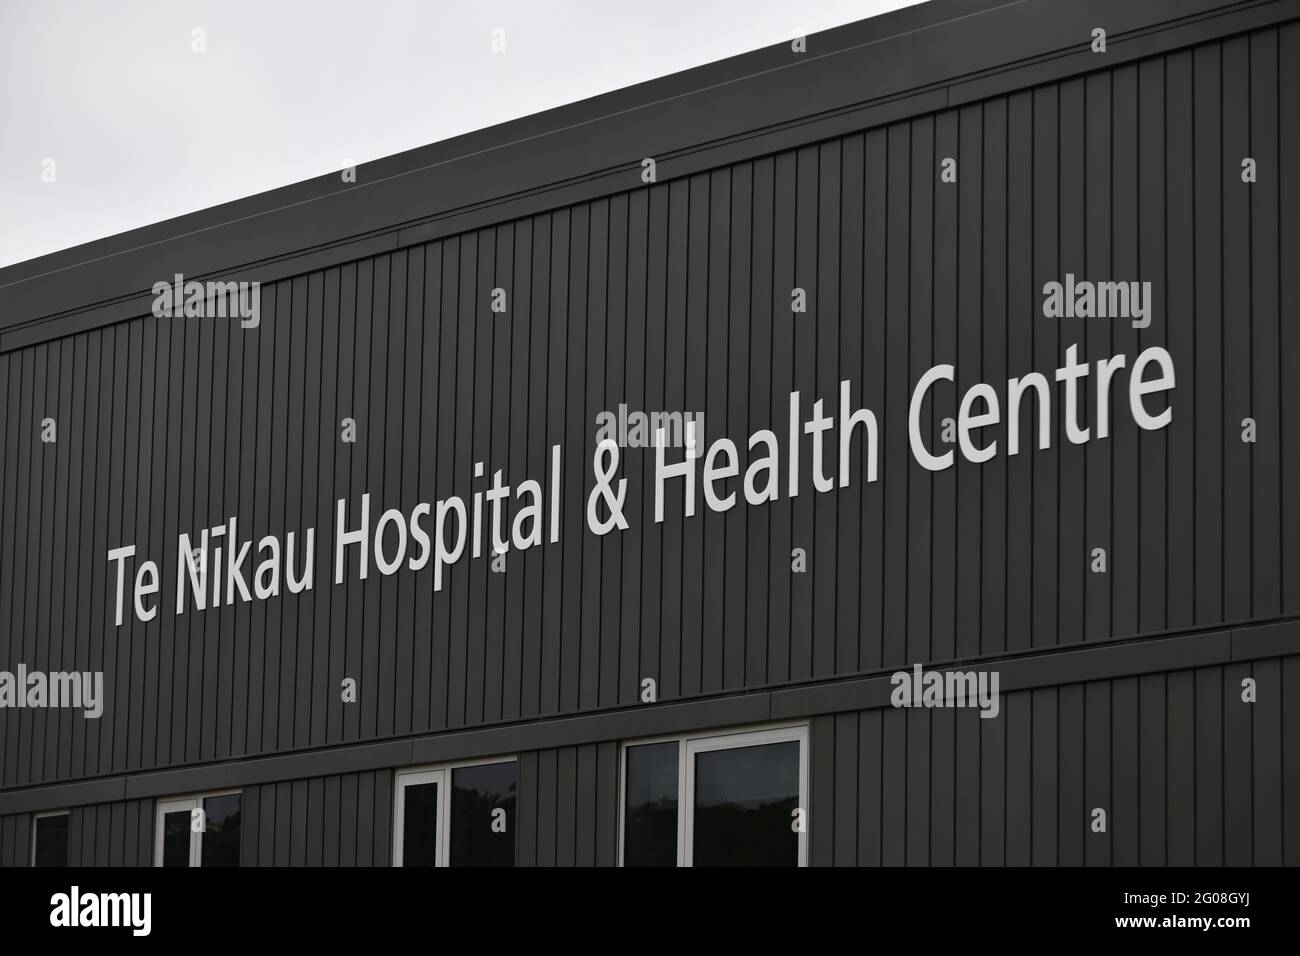 GREYMOUTH, NUOVA ZELANDA, 7 gennaio 2021: Segnaletica per il nuovo ospedale e centro sanitario te Nikau di Greymouth, Nuova Zelanda, 7 gennaio 2021 Foto Stock